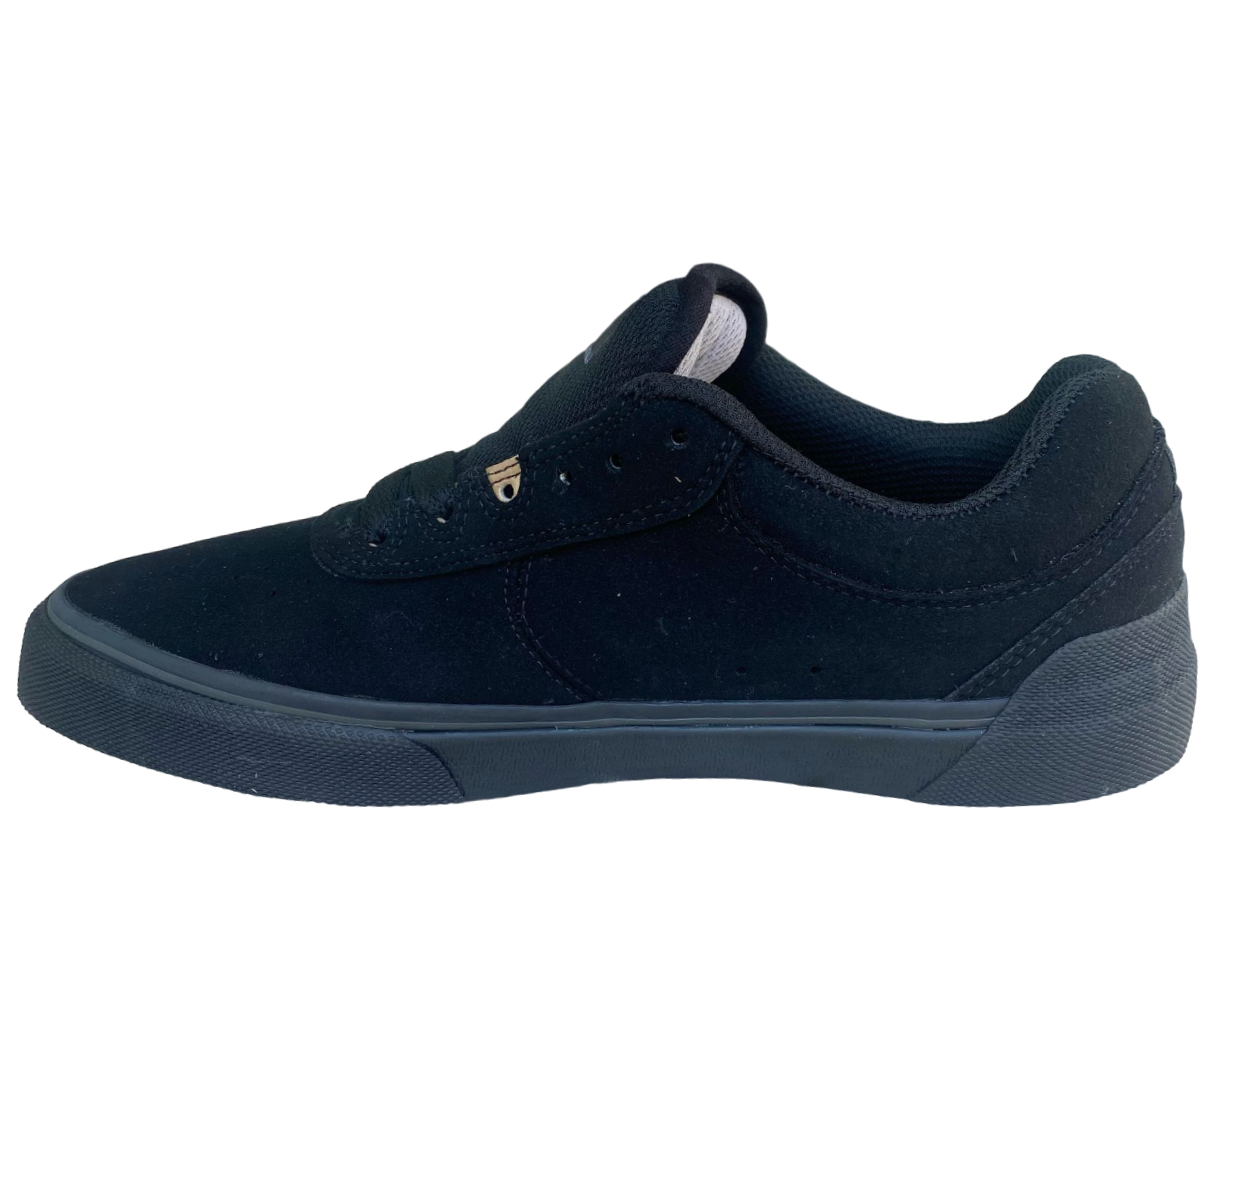 Etnies Joslin Vulc men&#39;s skateboard sneakers shoe 4101000534 003 black